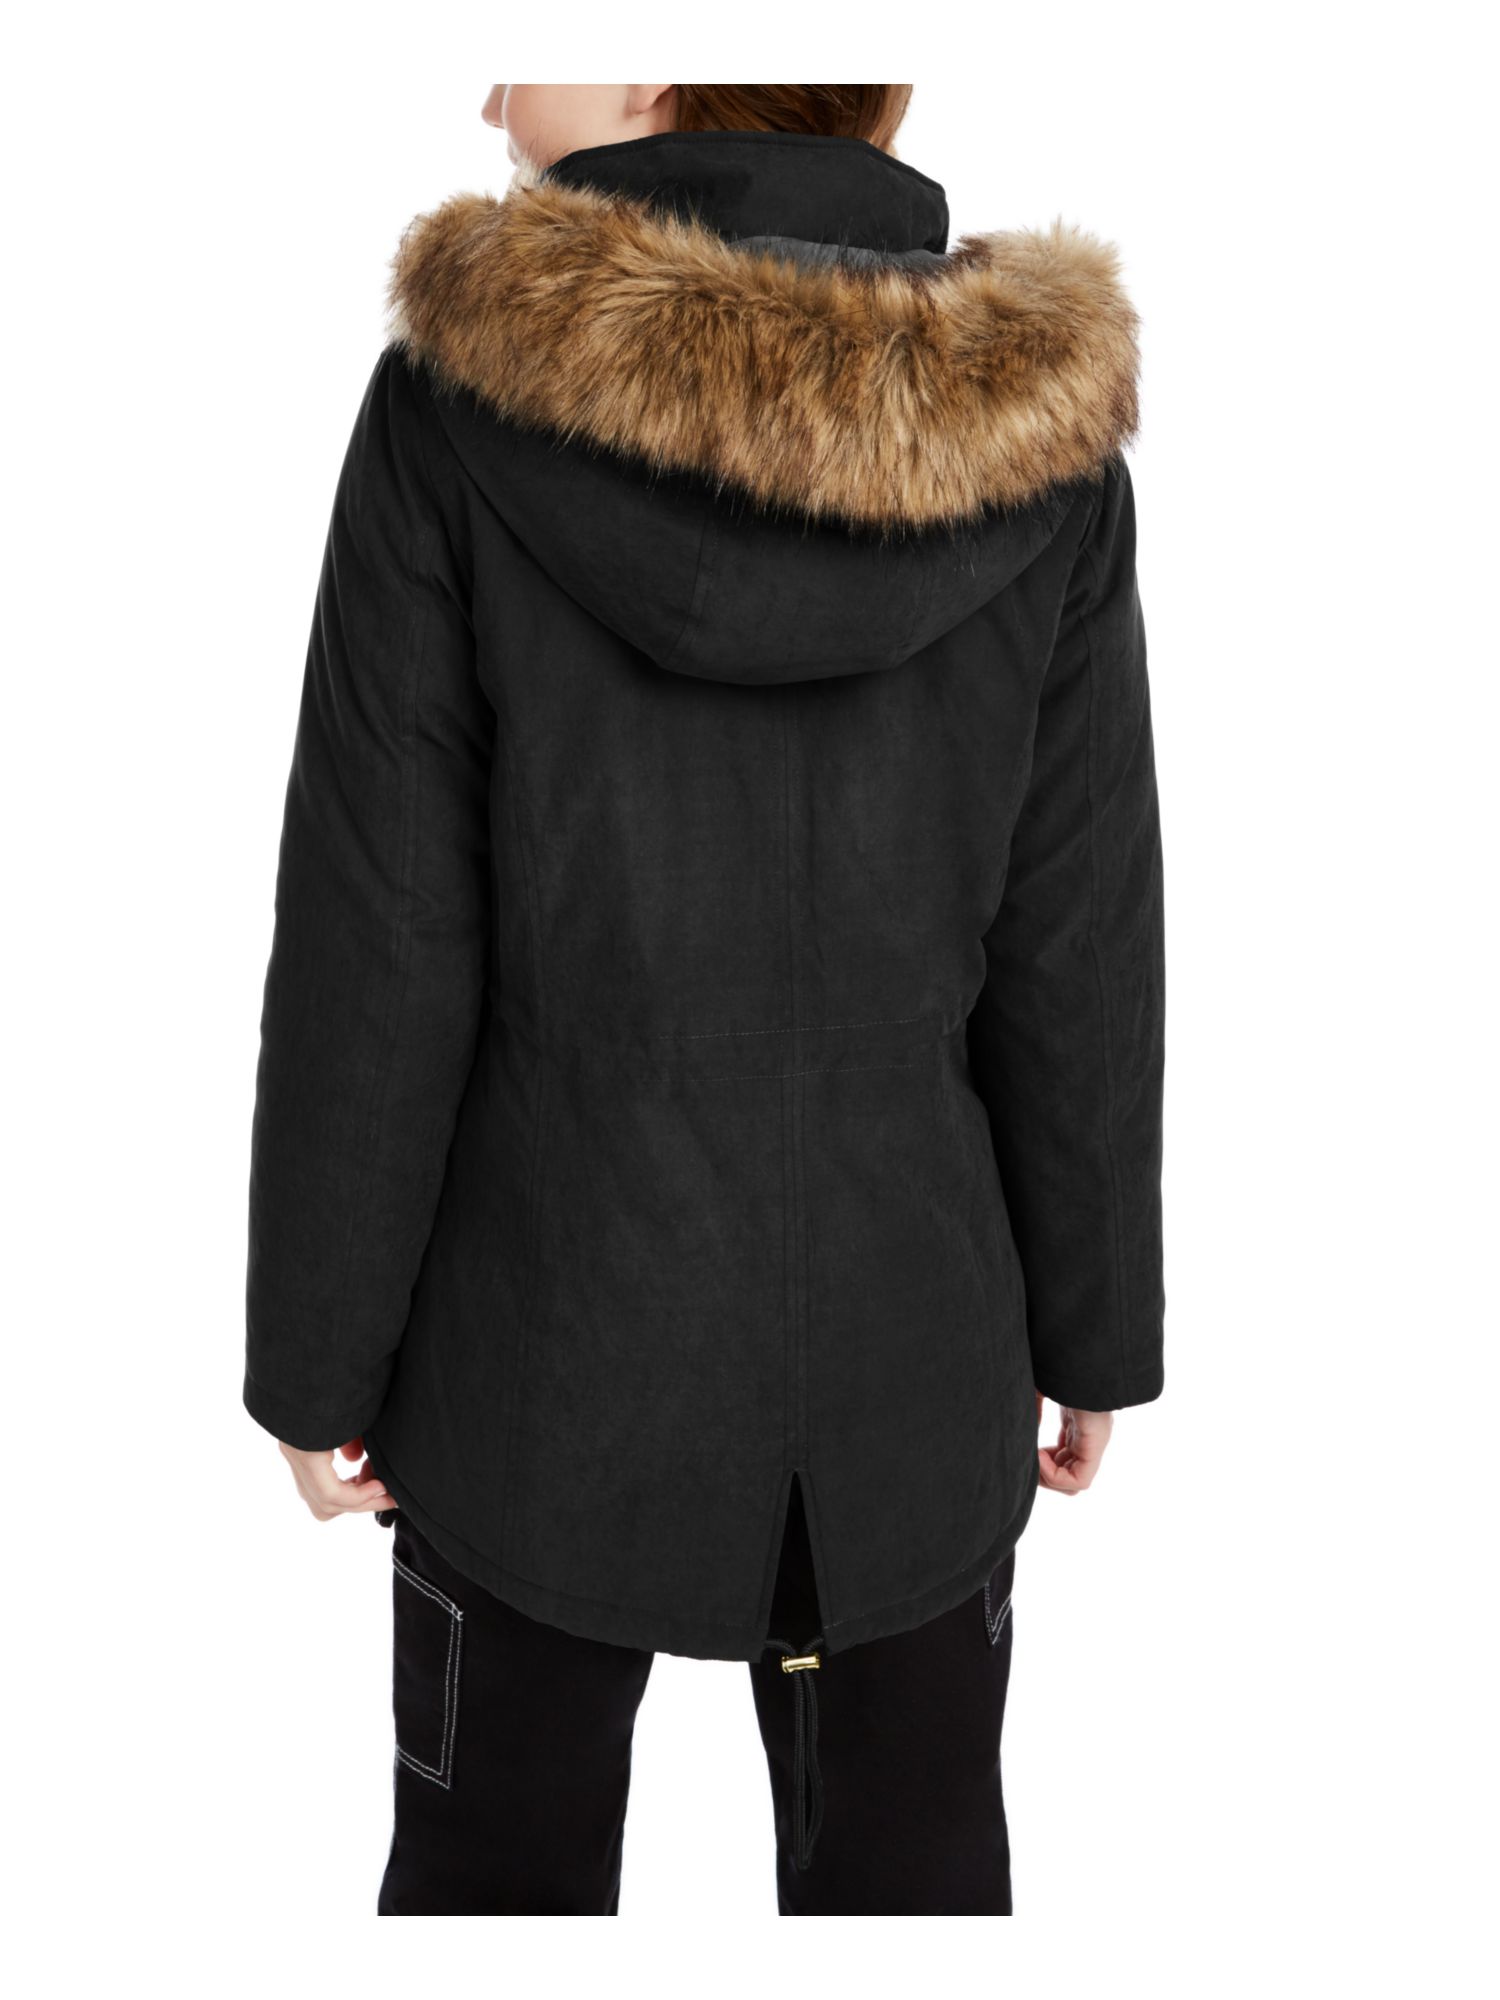 CELEBRITY PINK Womens Black Faux Fur Hood Parka Winter Jacket Coat Juniors L - image 2 of 4